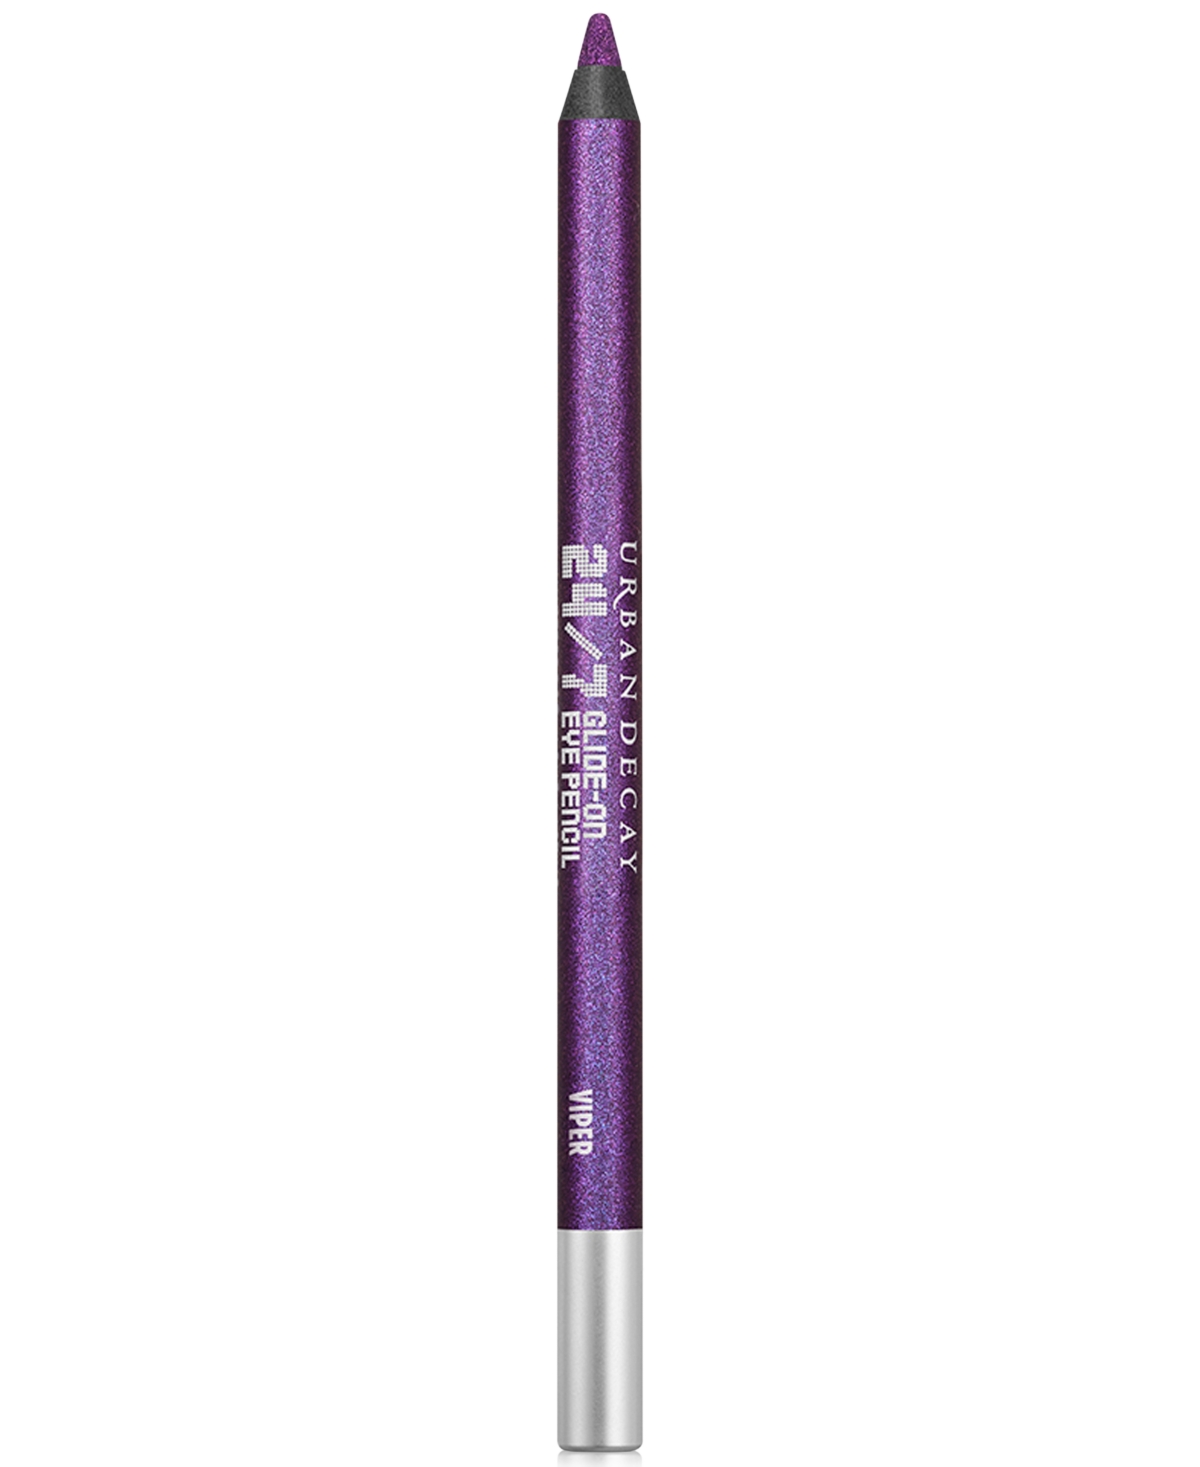 Urban Decay 24/7 Glide-on Waterproof Eyeliner Pencil In White